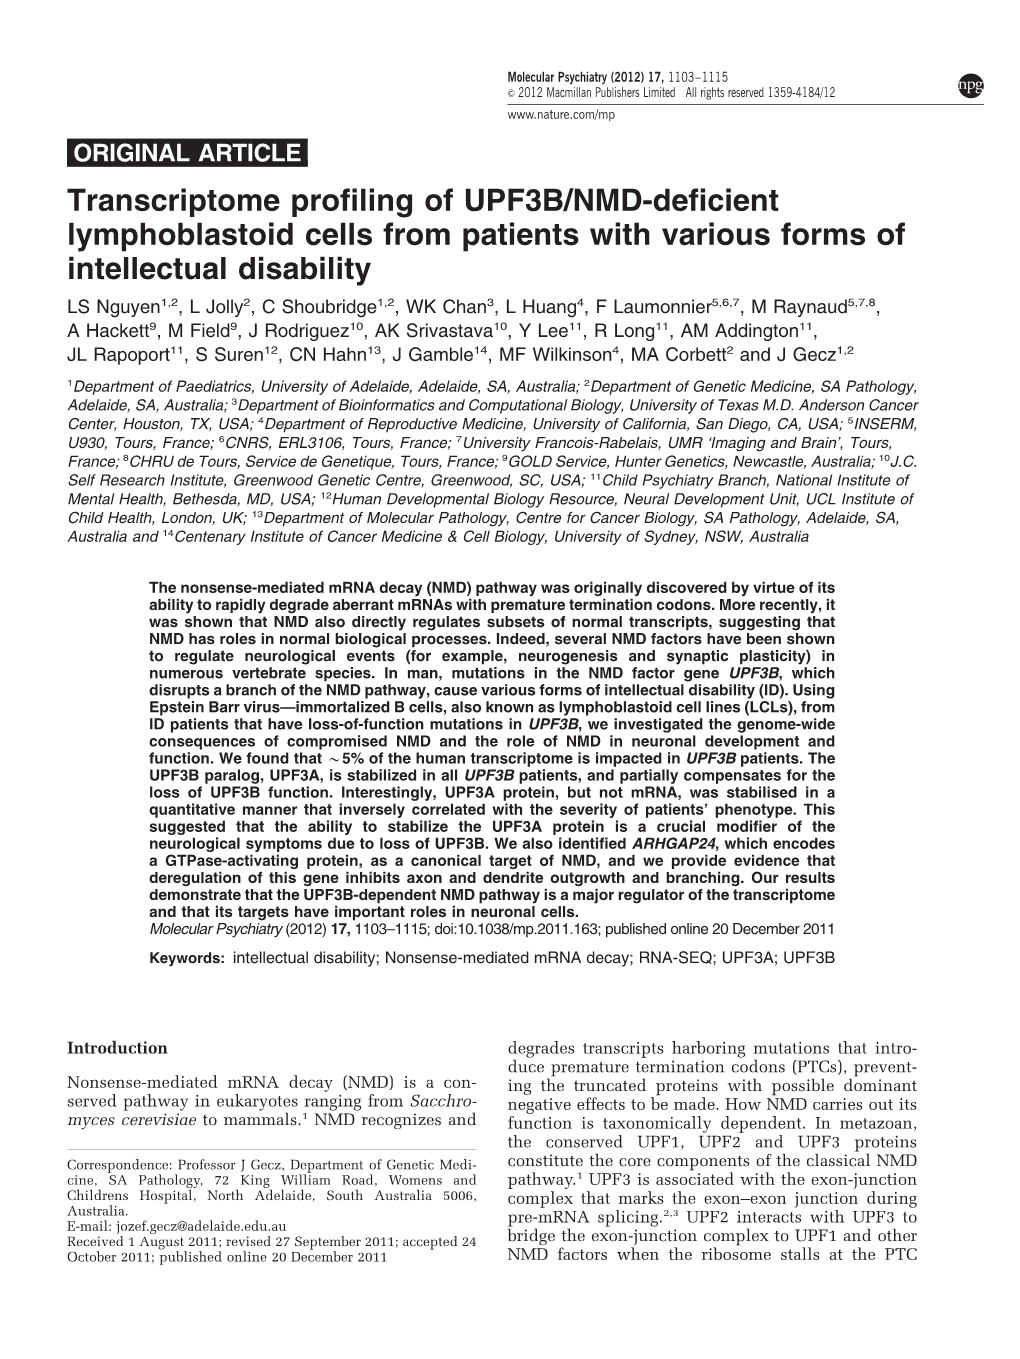 Transcriptome Profiling of UPF3B&Sol